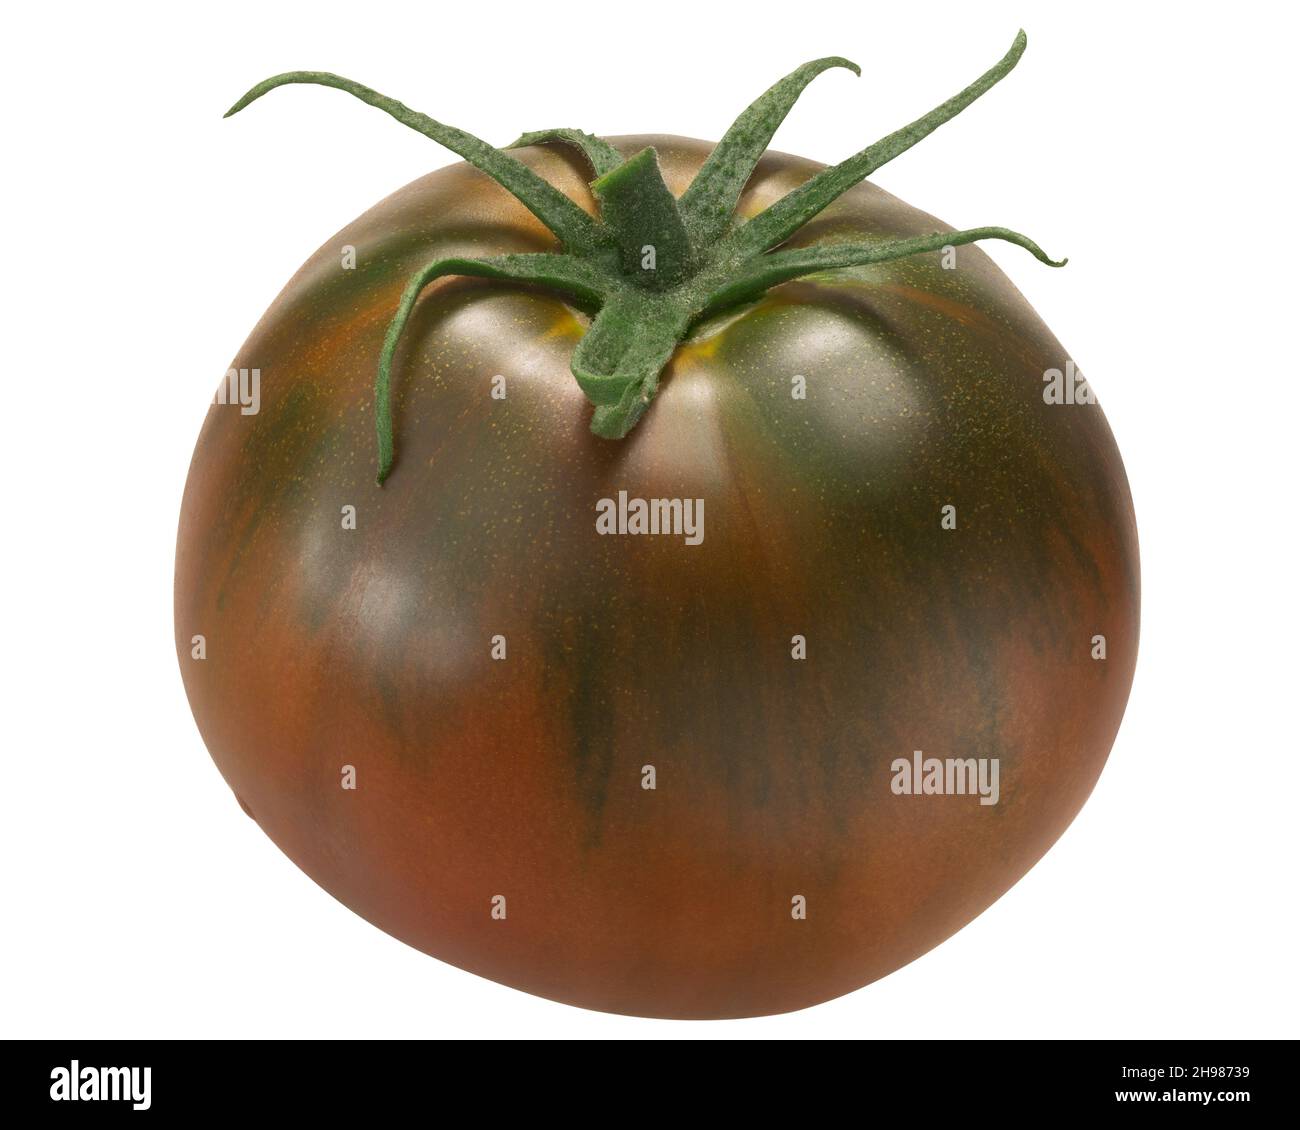 Cindao / Xindao brown heirloom tomato (Solanum lycopersicum fruit) isolated Stock Photo